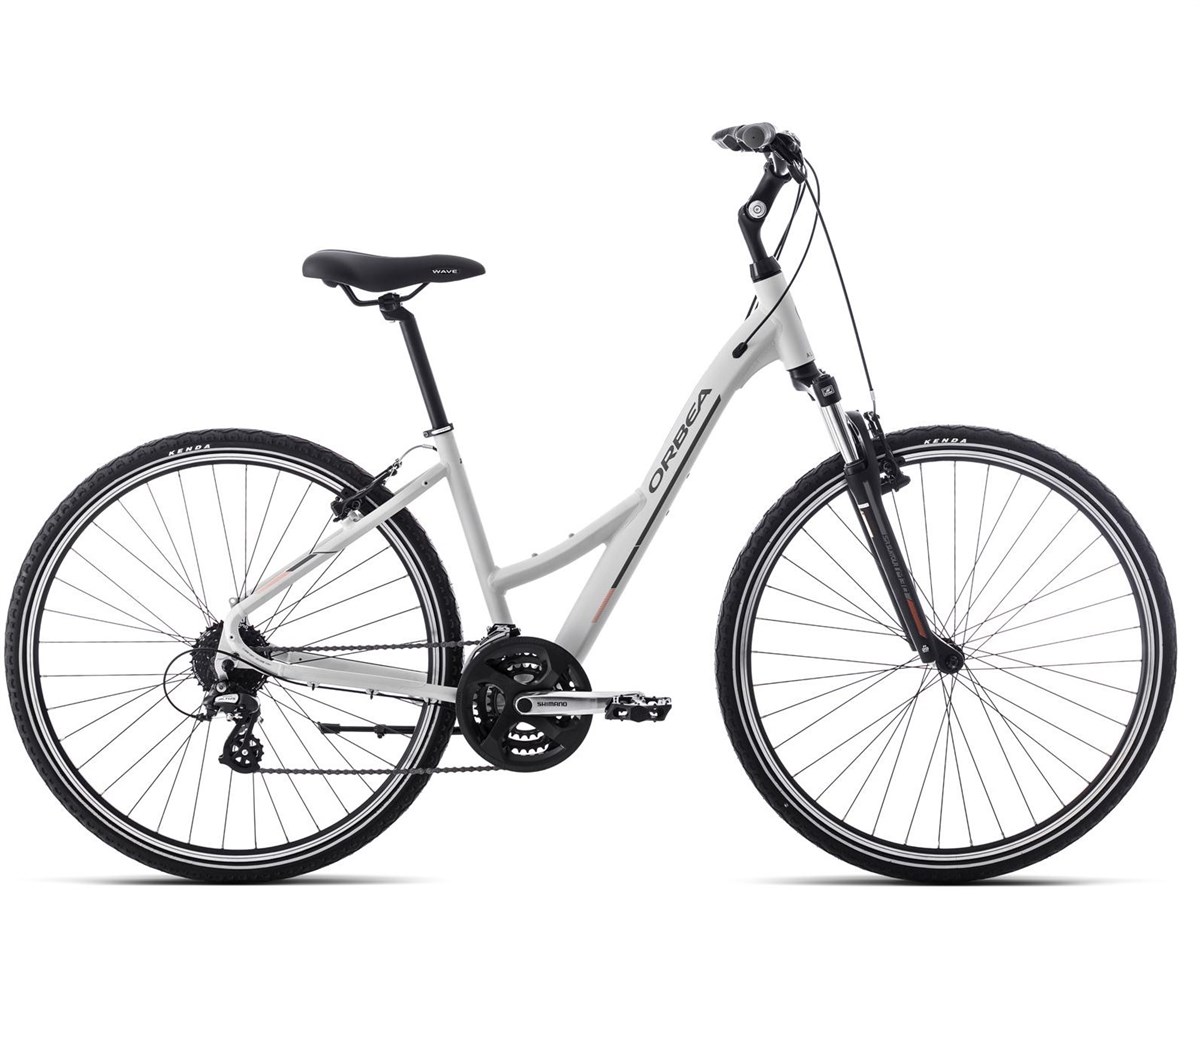 Orbea Comfort 28 10 Open 2016 - Hybrid Sports Bike product image